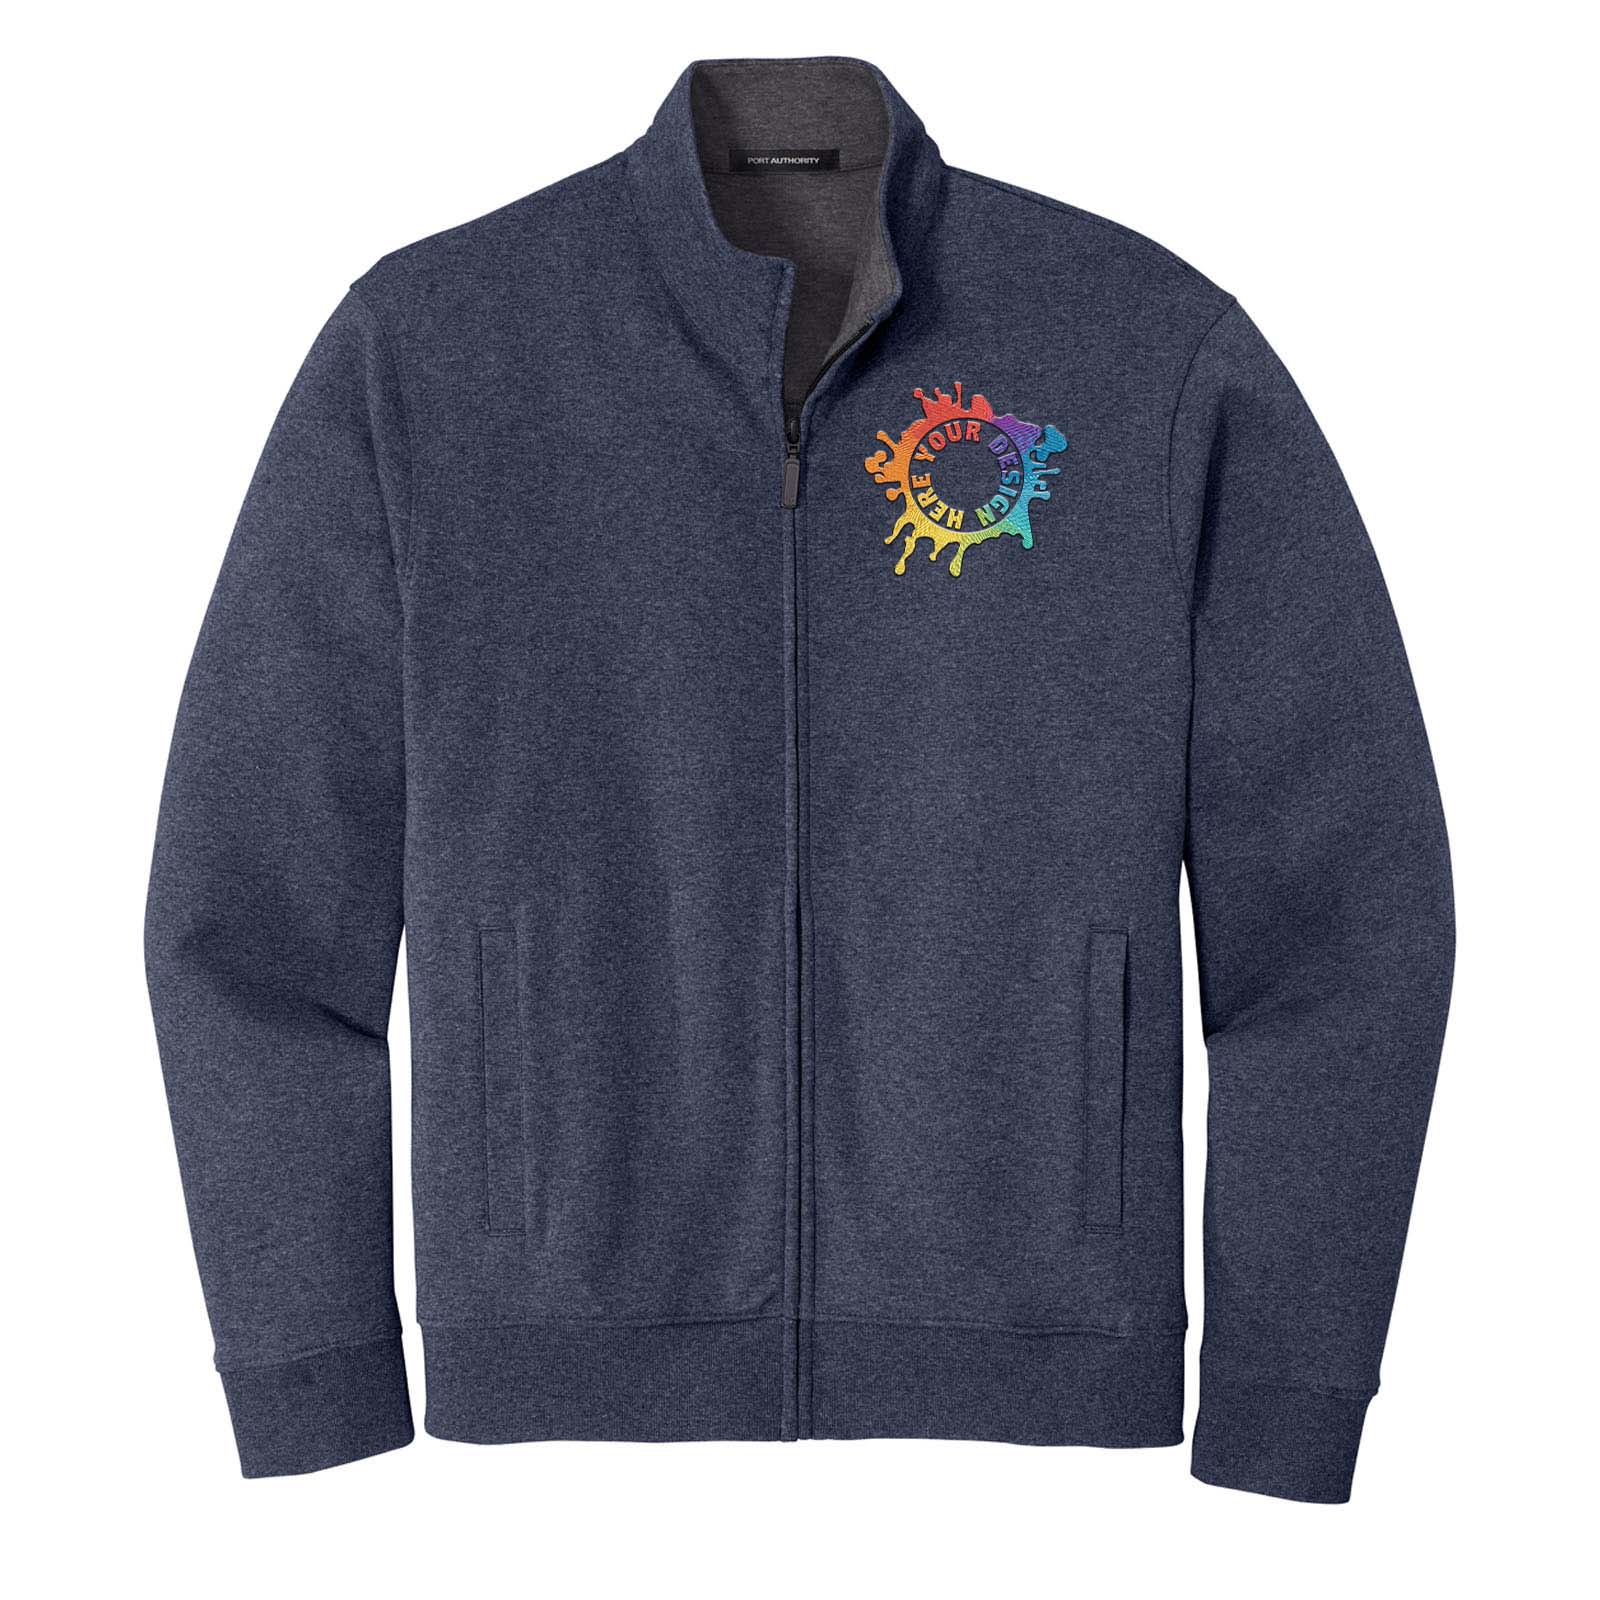 Port Authority® Interlock Full-Zip Jacket Embroidery - Mato & Hash